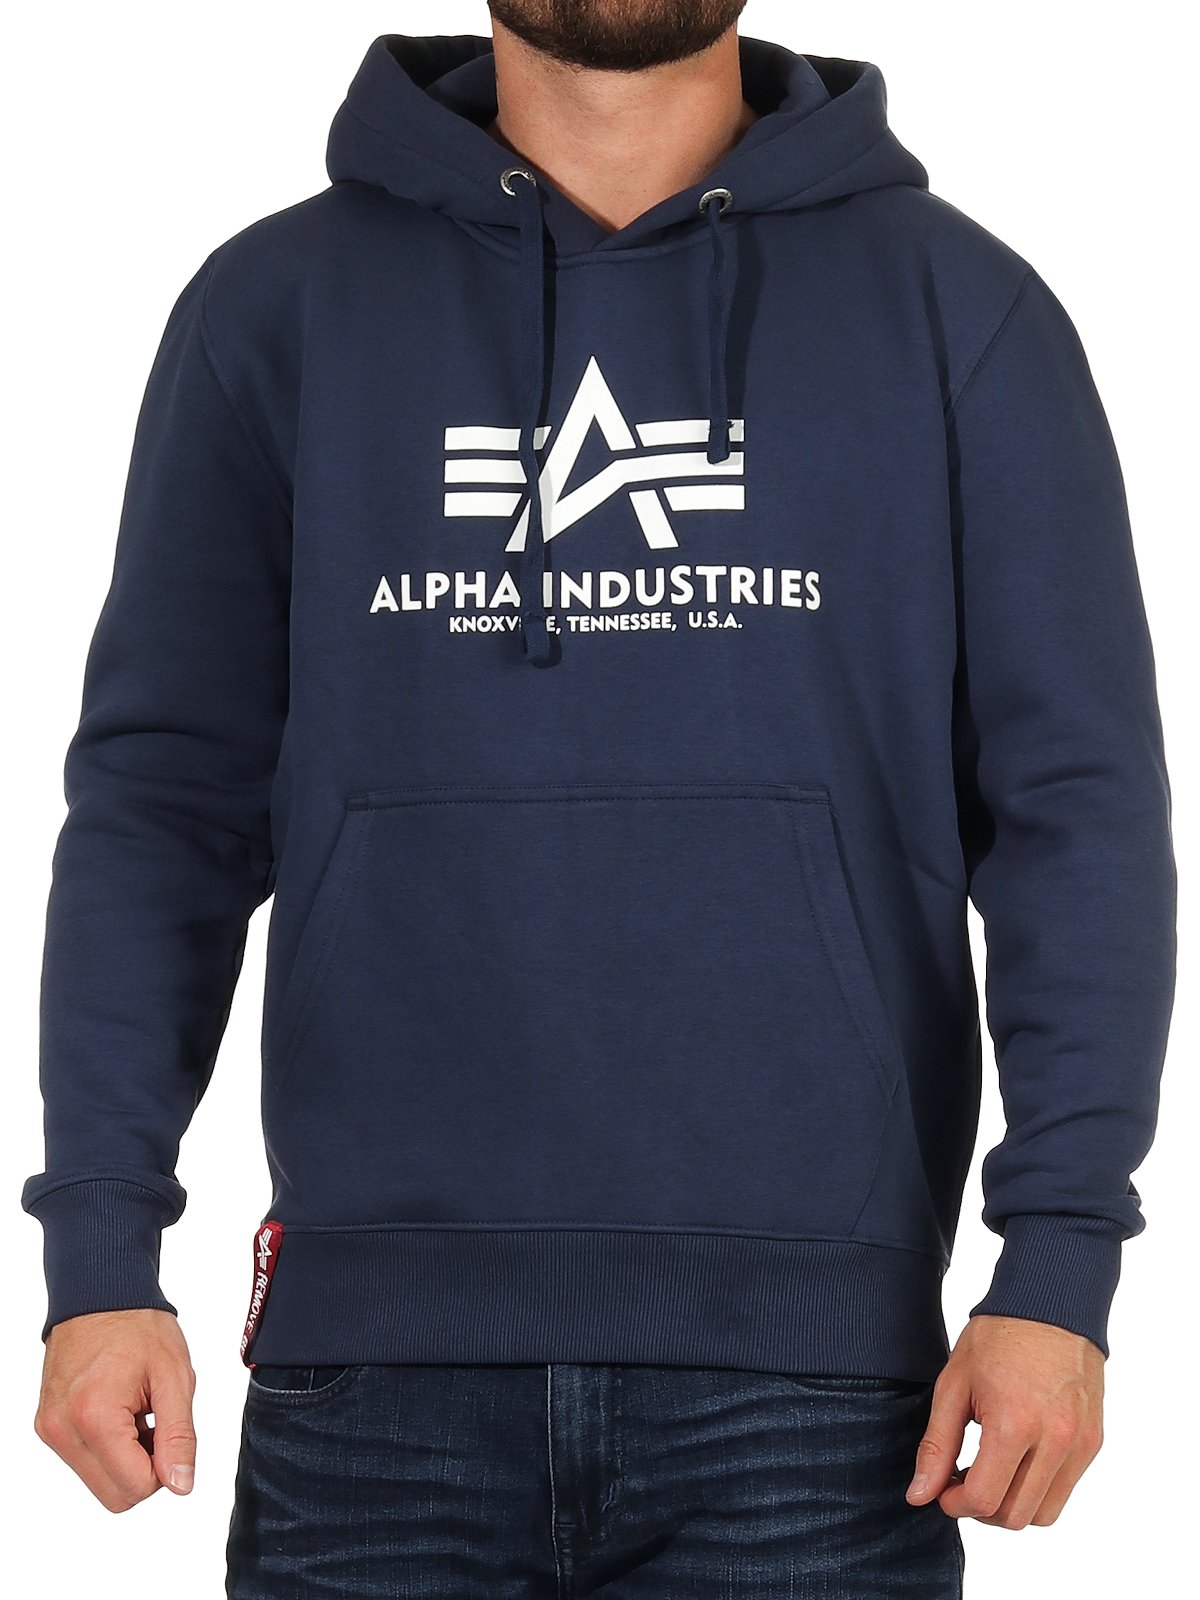 Industries Alpha Sport Pullover Basic Hoody 178312 | Sweatshirt eBay Hoodie Herren